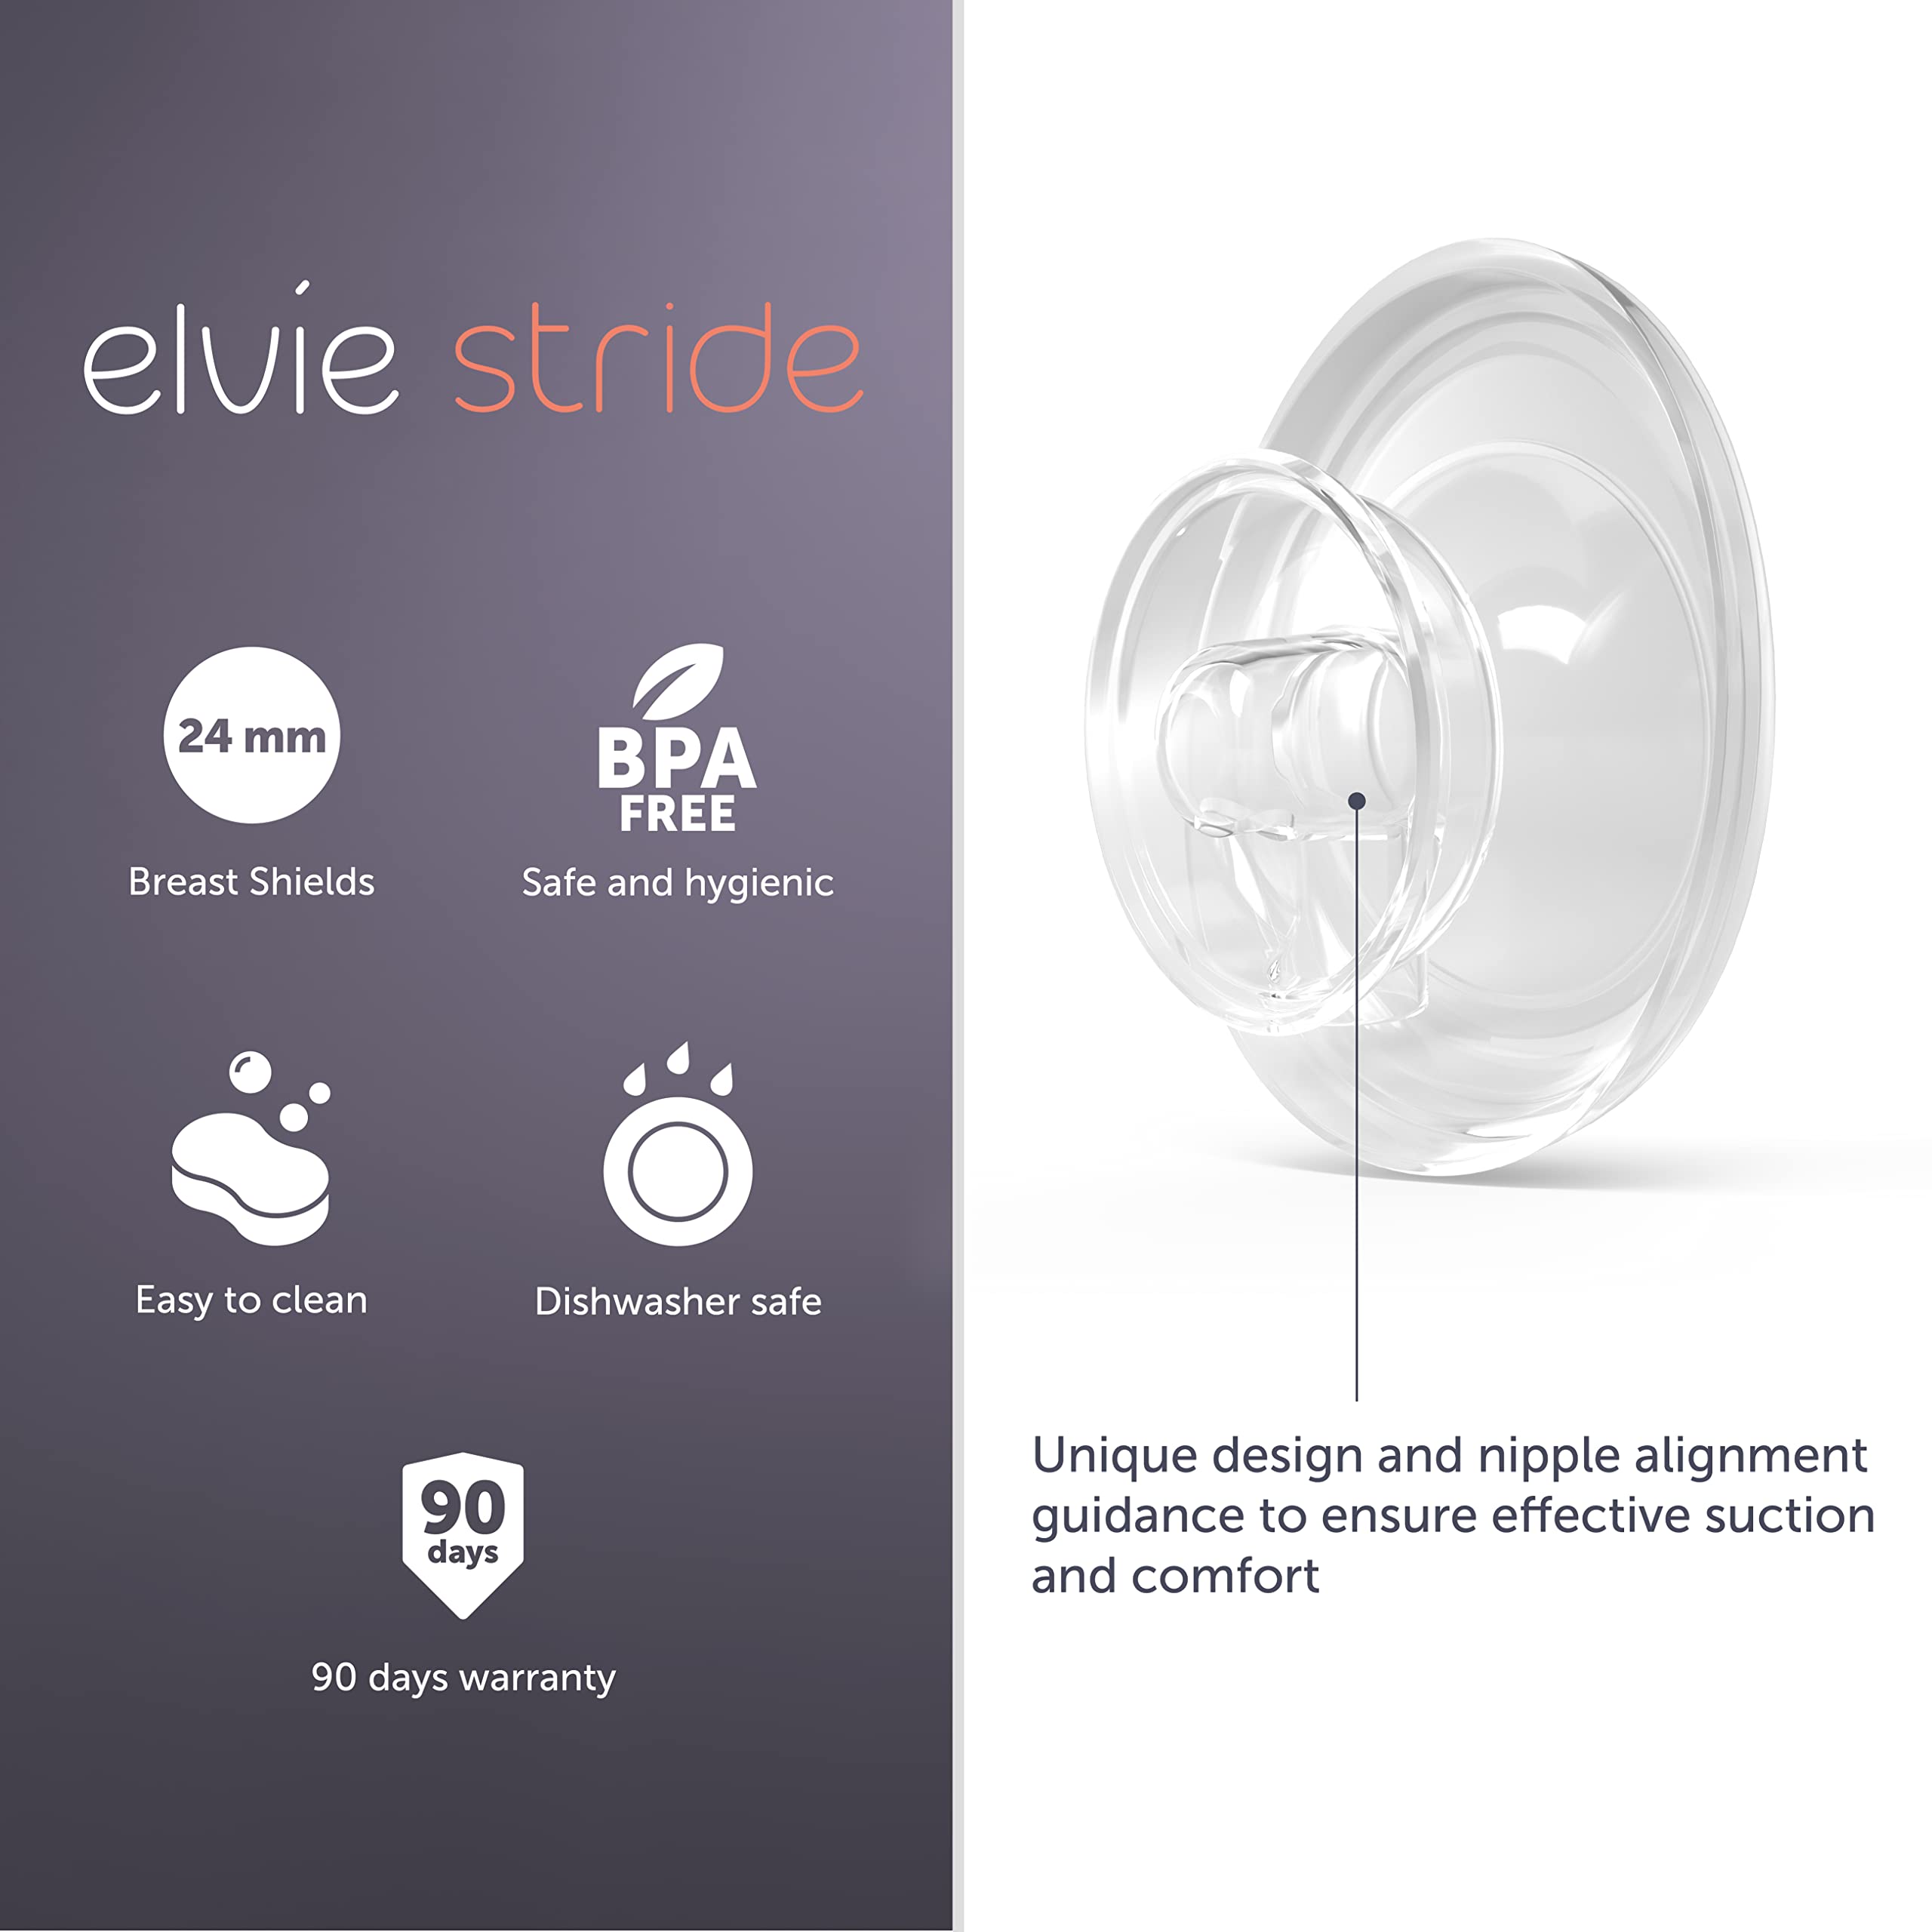 Elvie Stride Breast Pump Breast Shield - 24mm | 2 Pack | Nipple Shield Flange for Pumping Breast Milk | Breastfeeding Essentials for Electric Breast Pumps | BPA Free, Dishwasher Safe